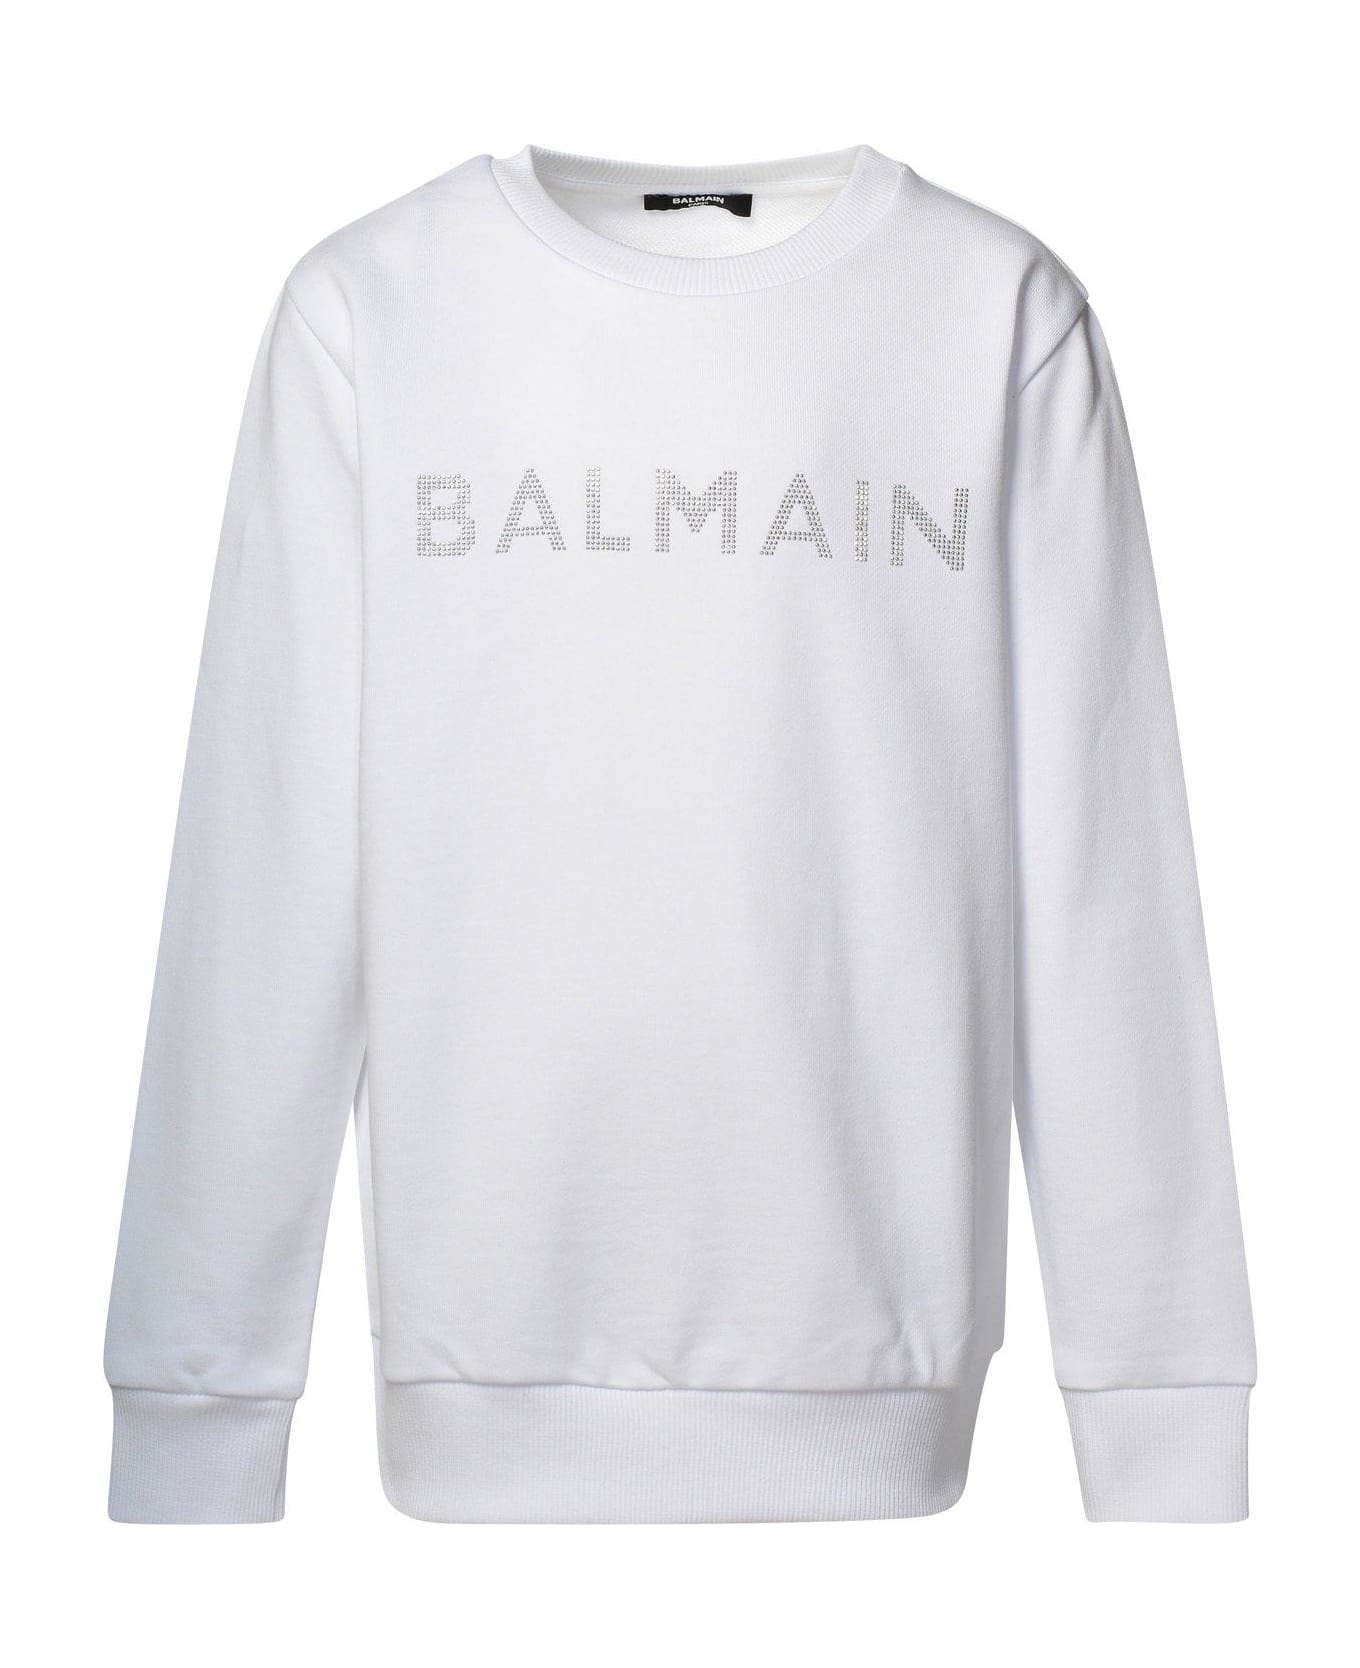 Balmain Logo Embellished Crewneck Sweatshirt - Ag